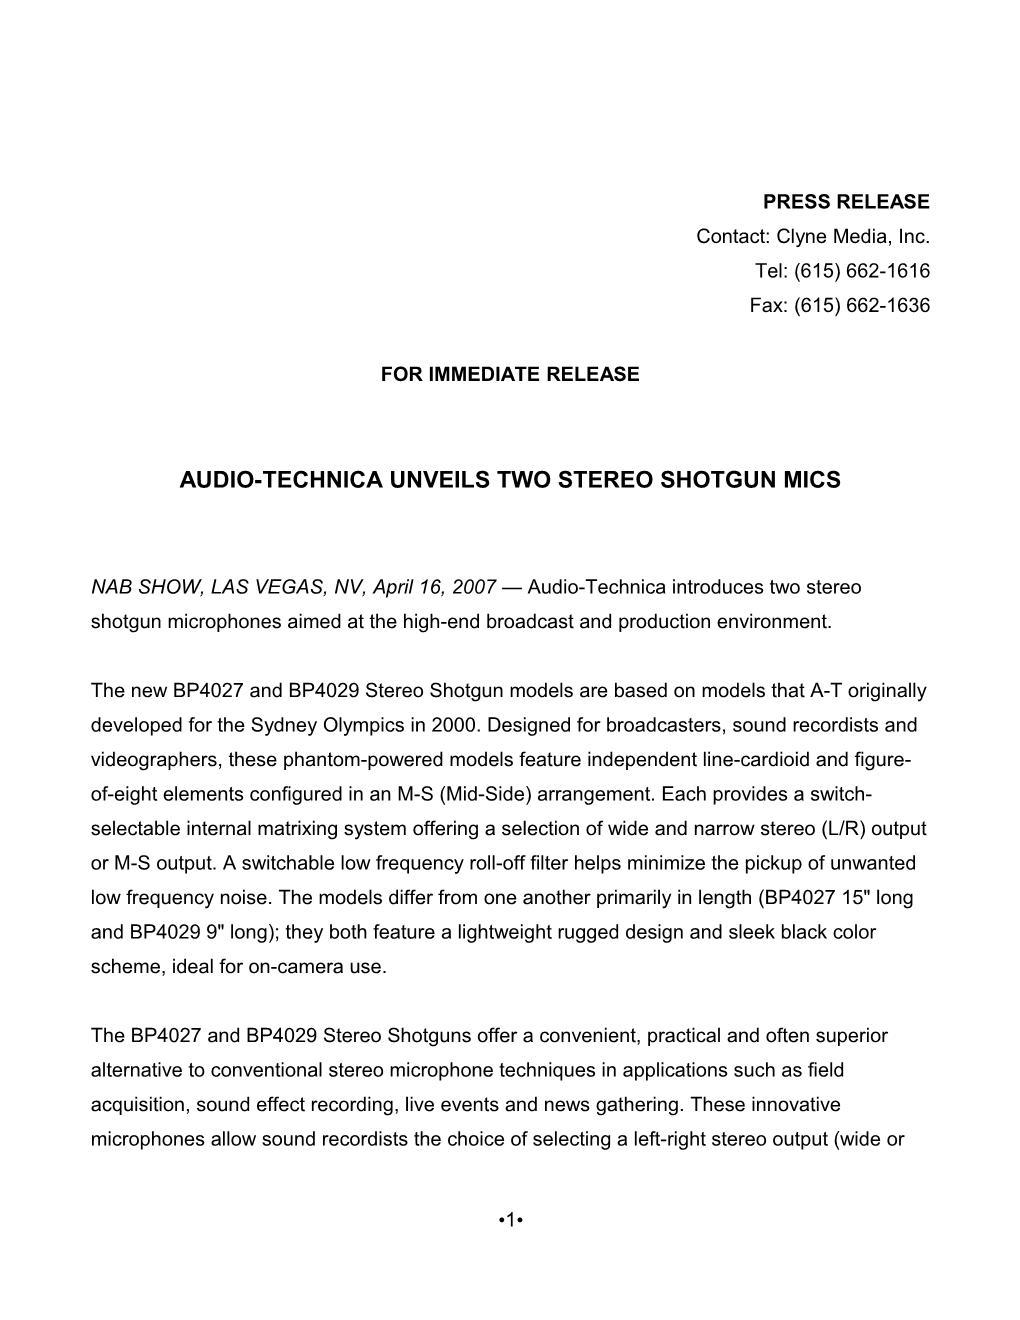 Audio-Technica Unveils Two Stereo Shotgun Mics